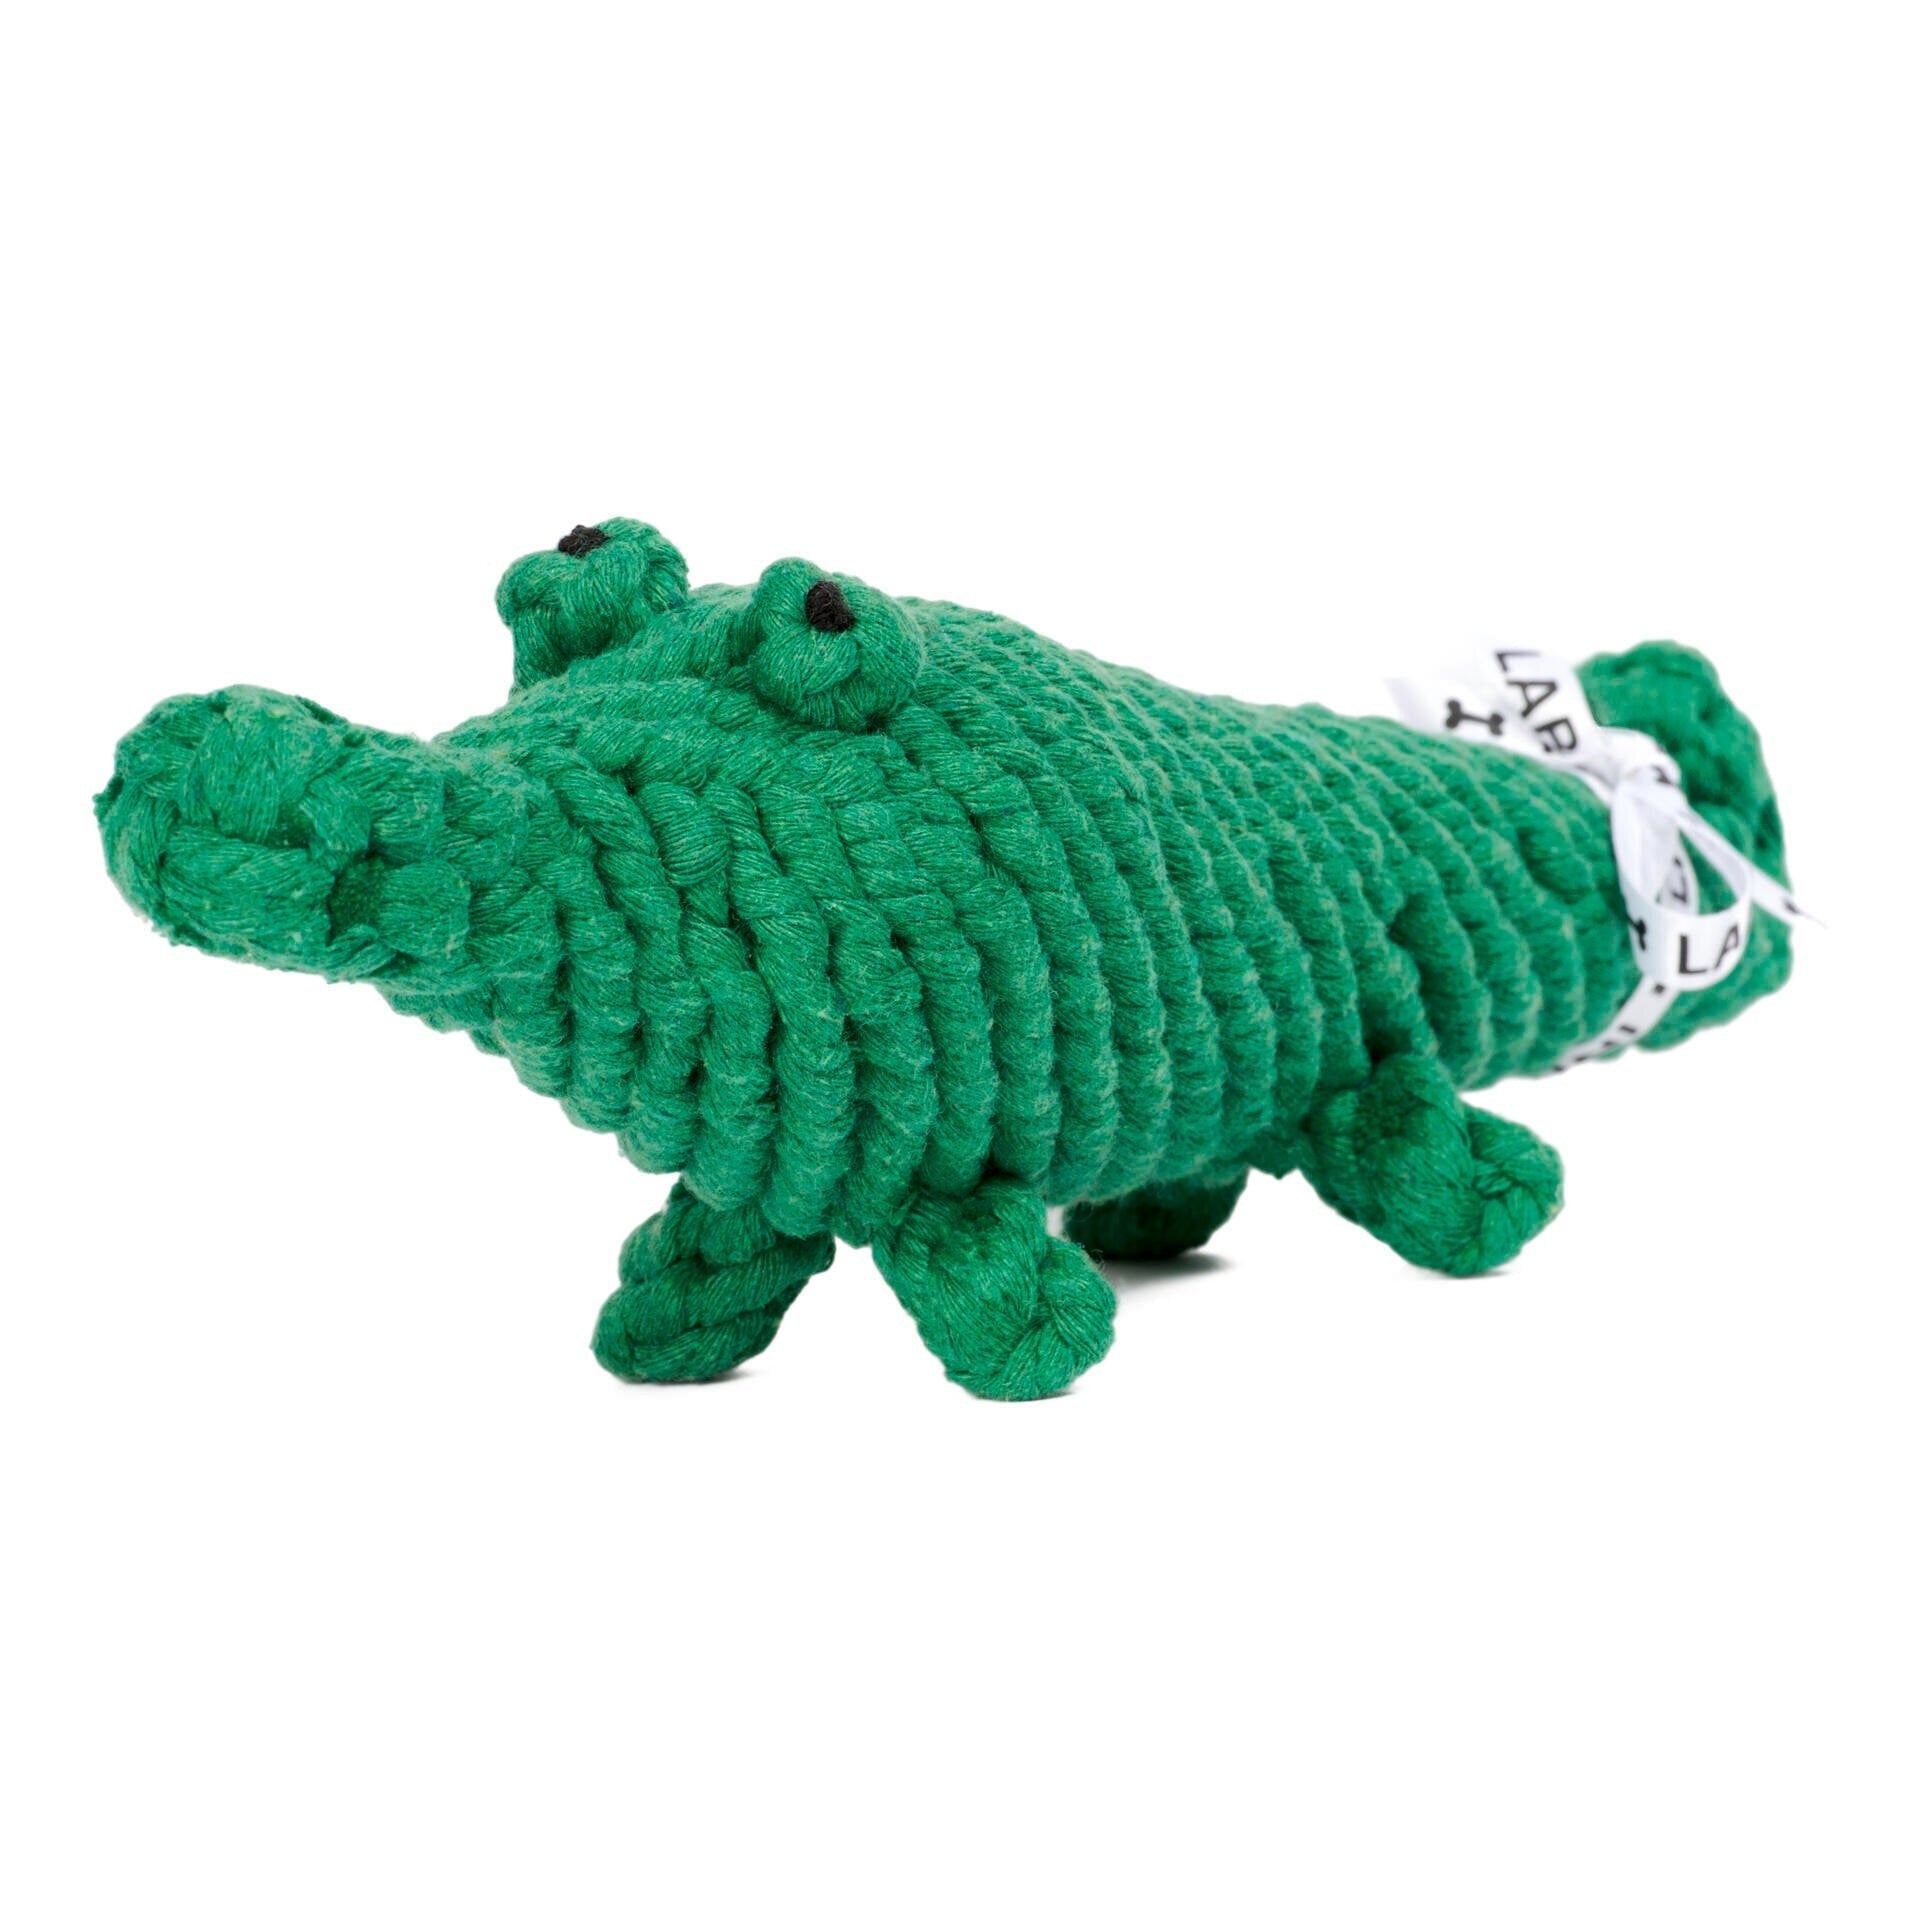 PKALA00808S - Kalli krokotiilin muotoinen lelu - Muotitassu